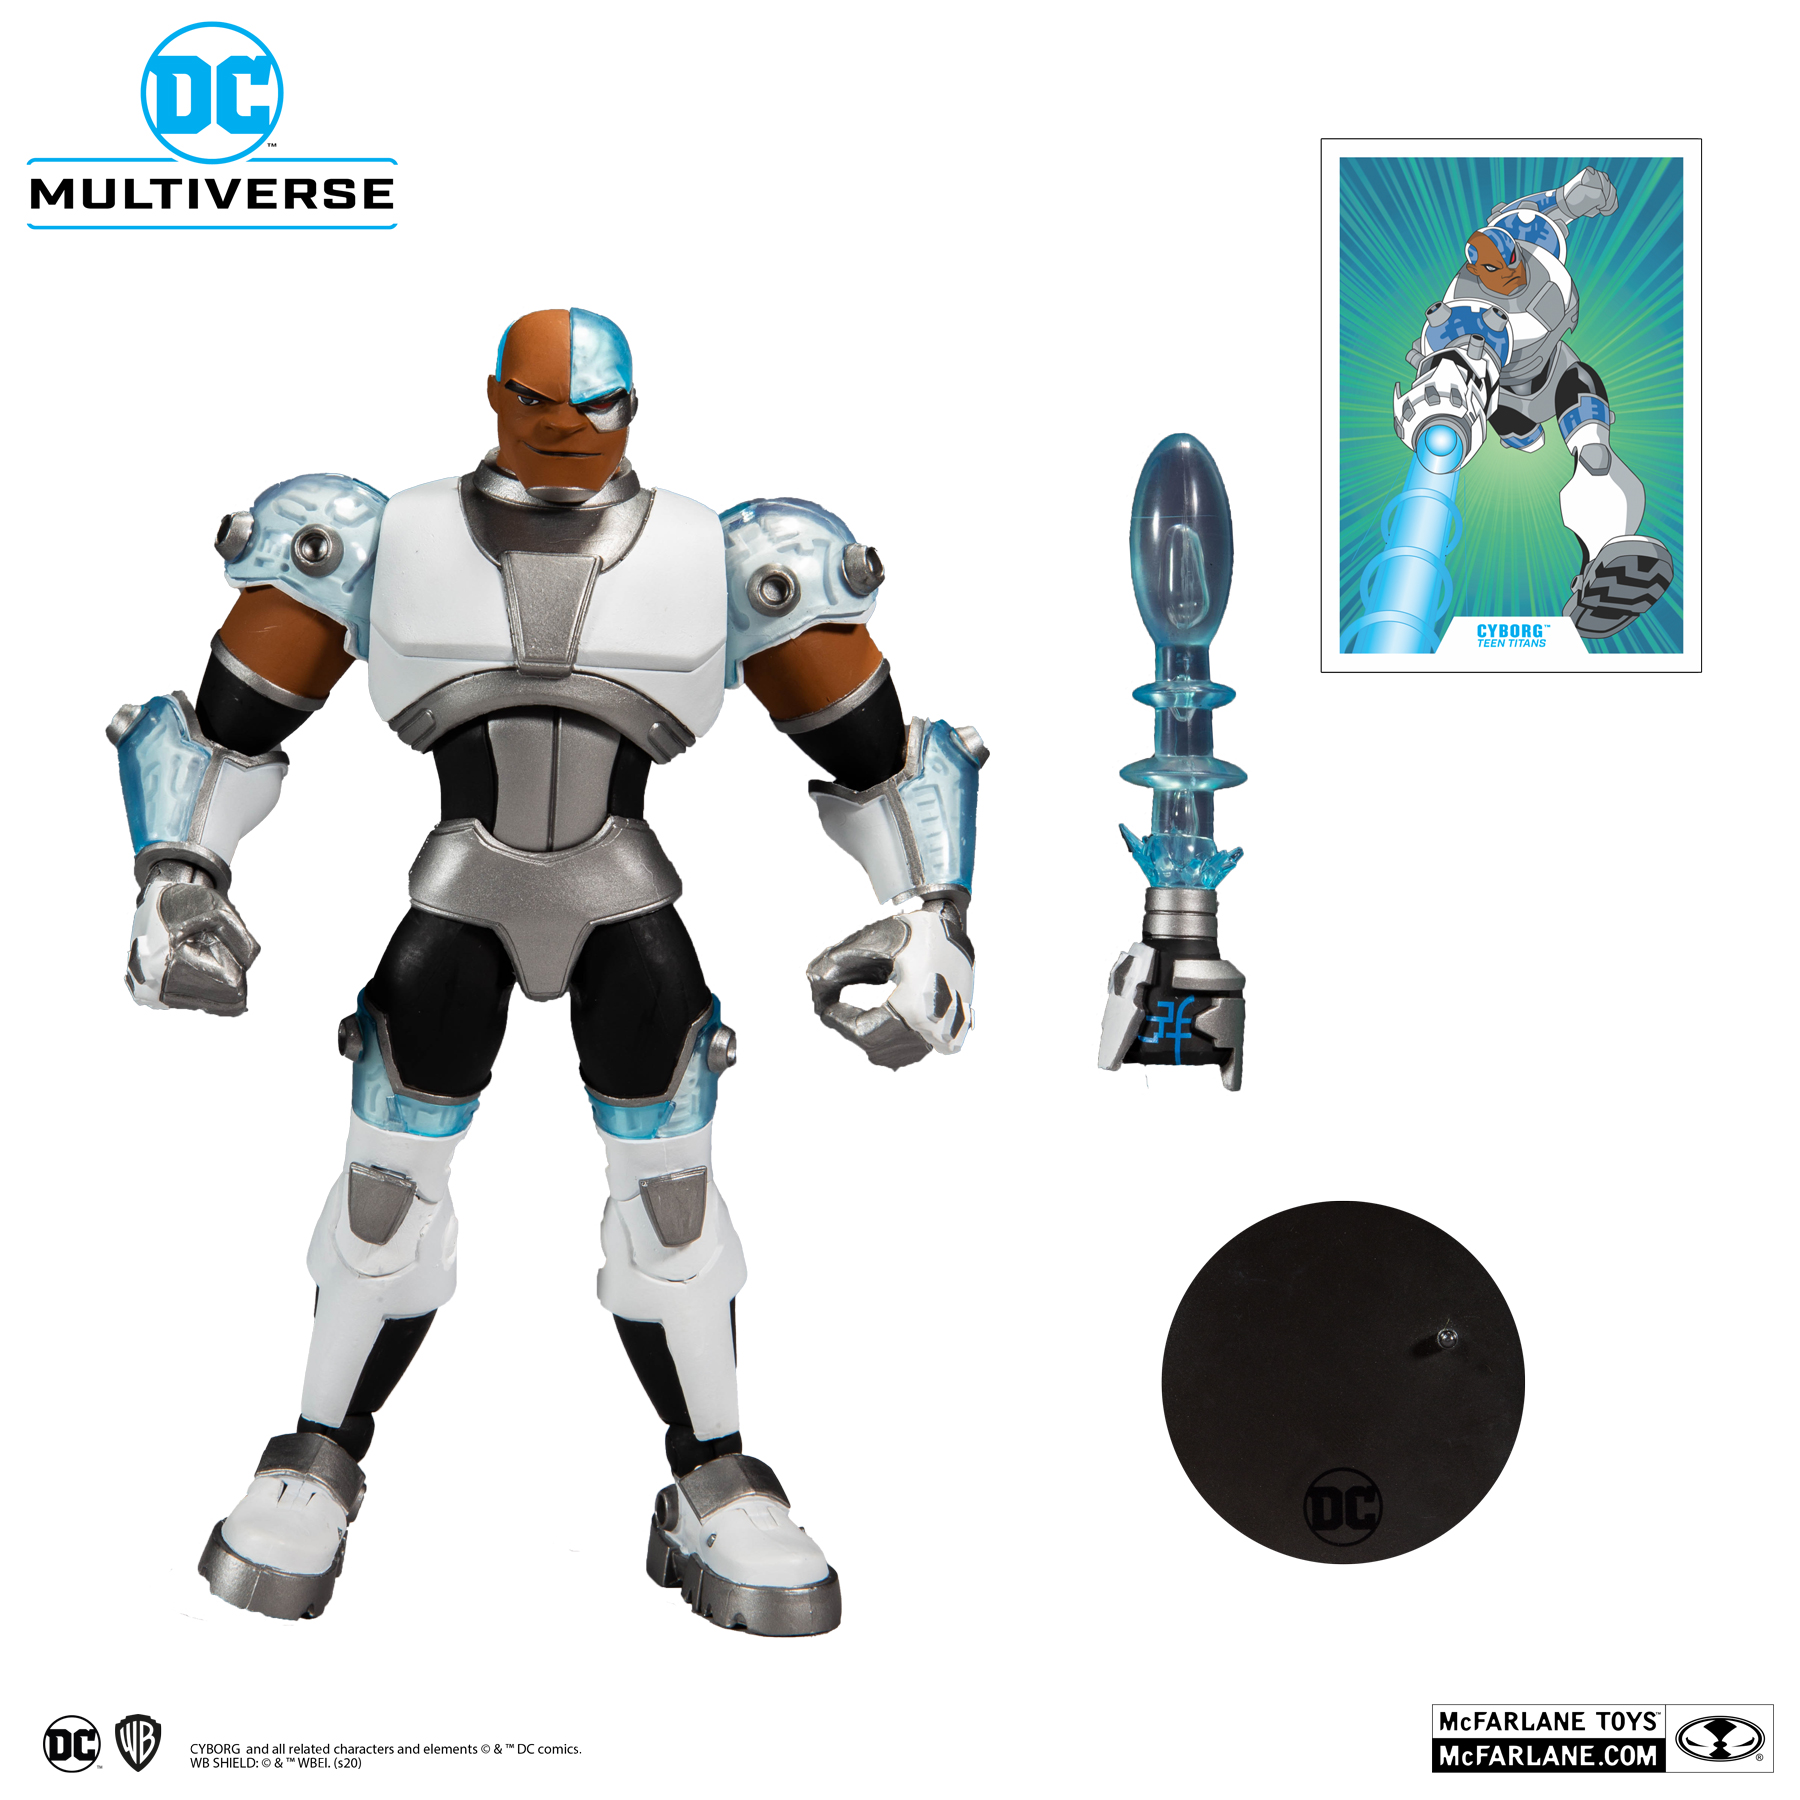 McFarlane-Toys-DC-Multiverse-Cyborg-Promo-07.jpg